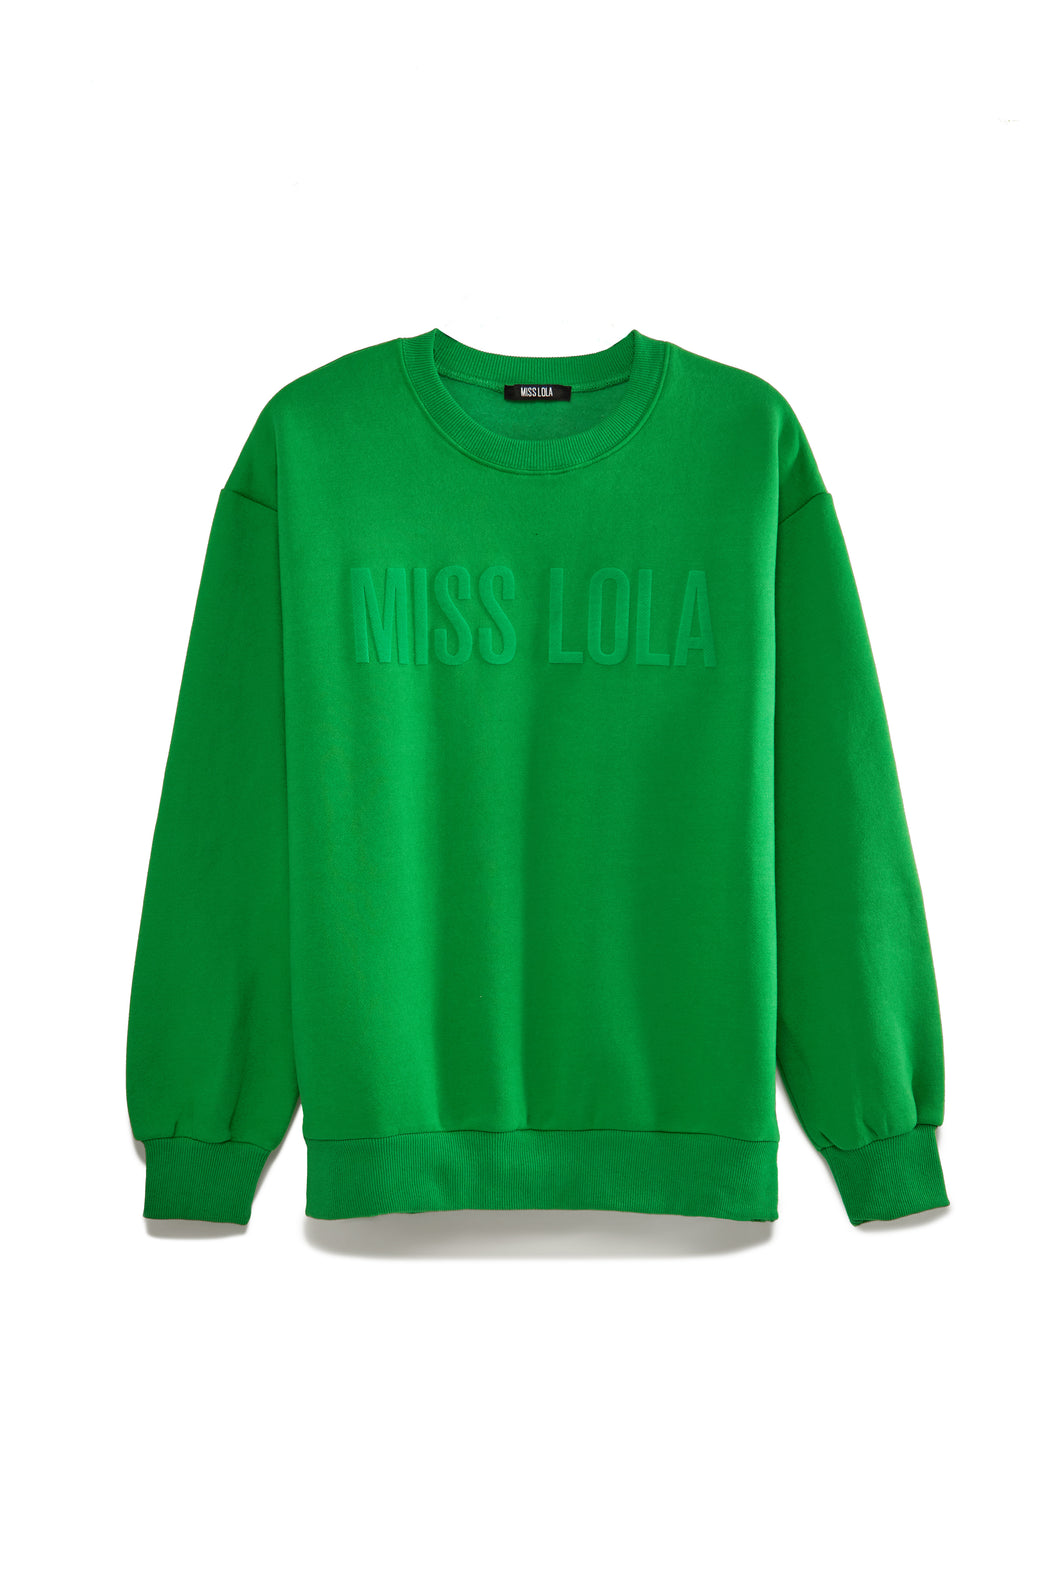 Miss Lola Exclusive Crewneck Sweater - Green